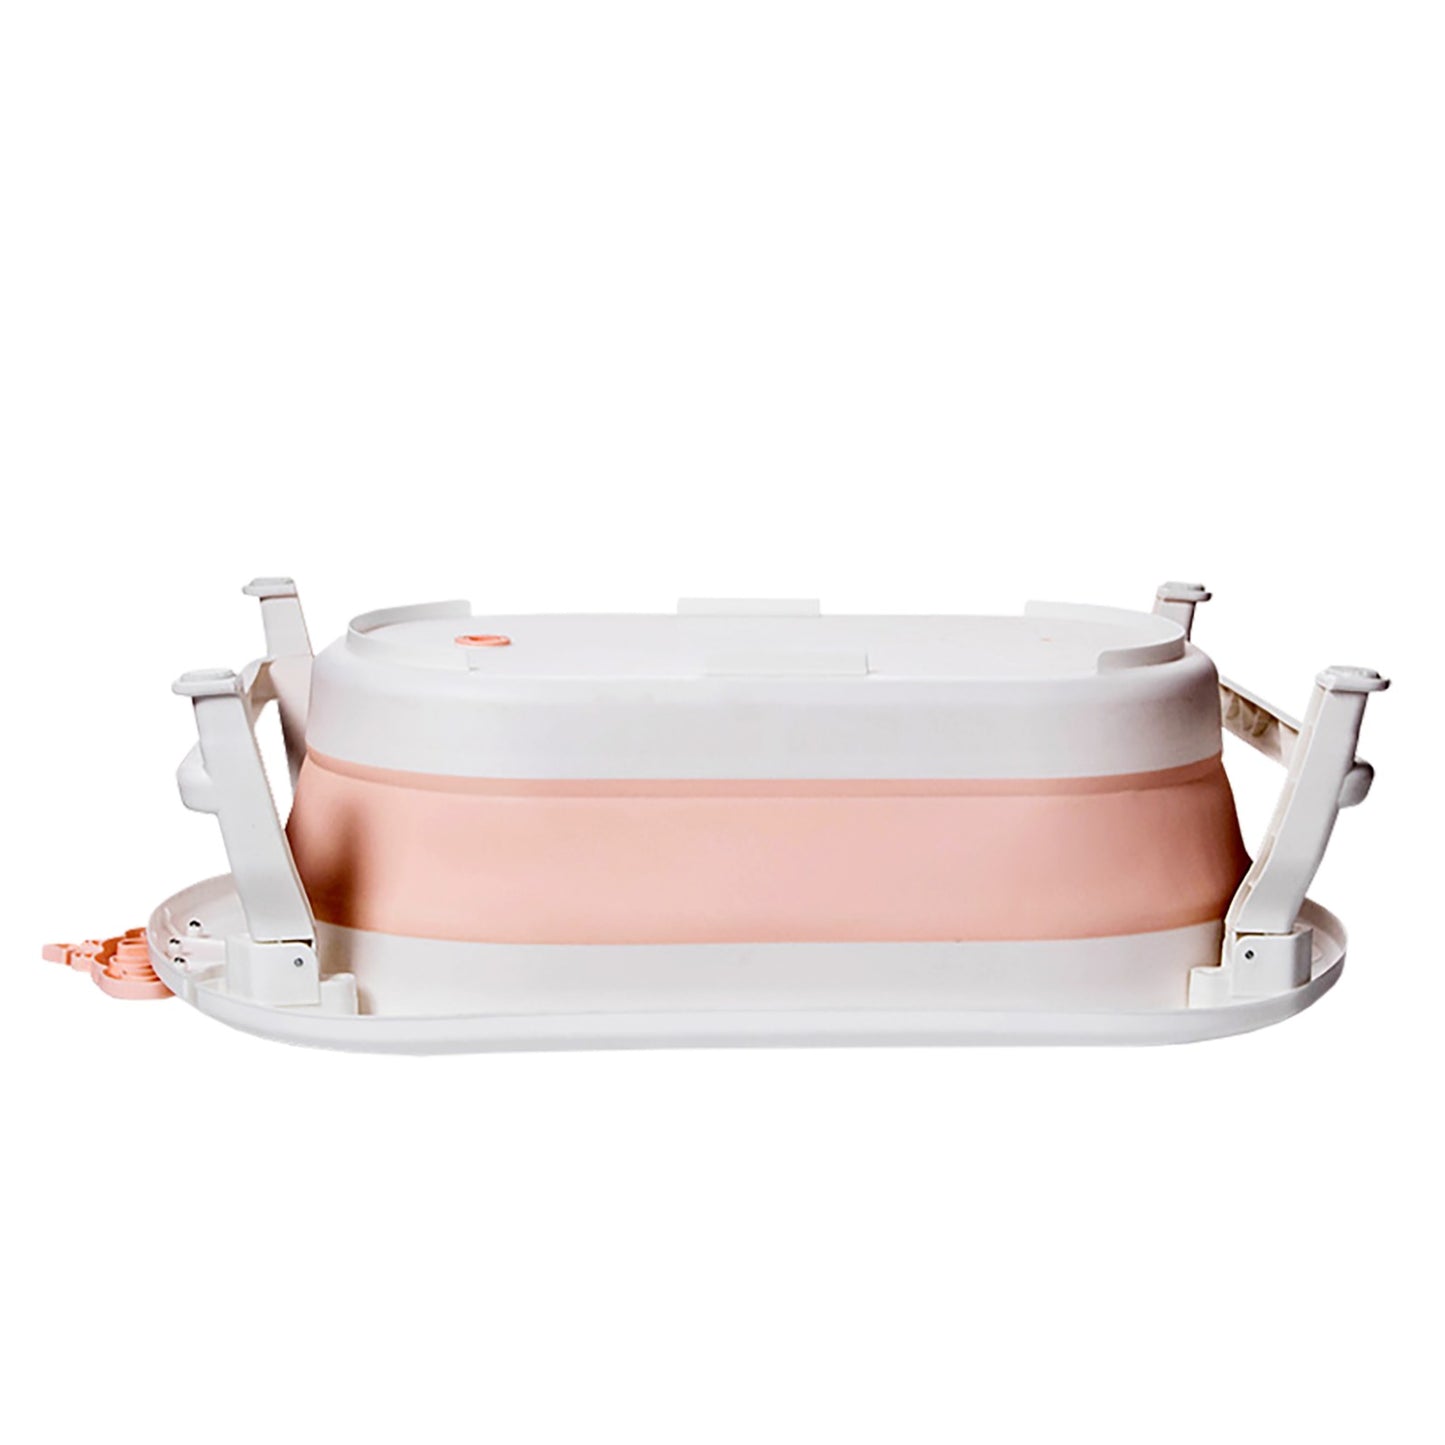 Crown Collapsible Bath Tub